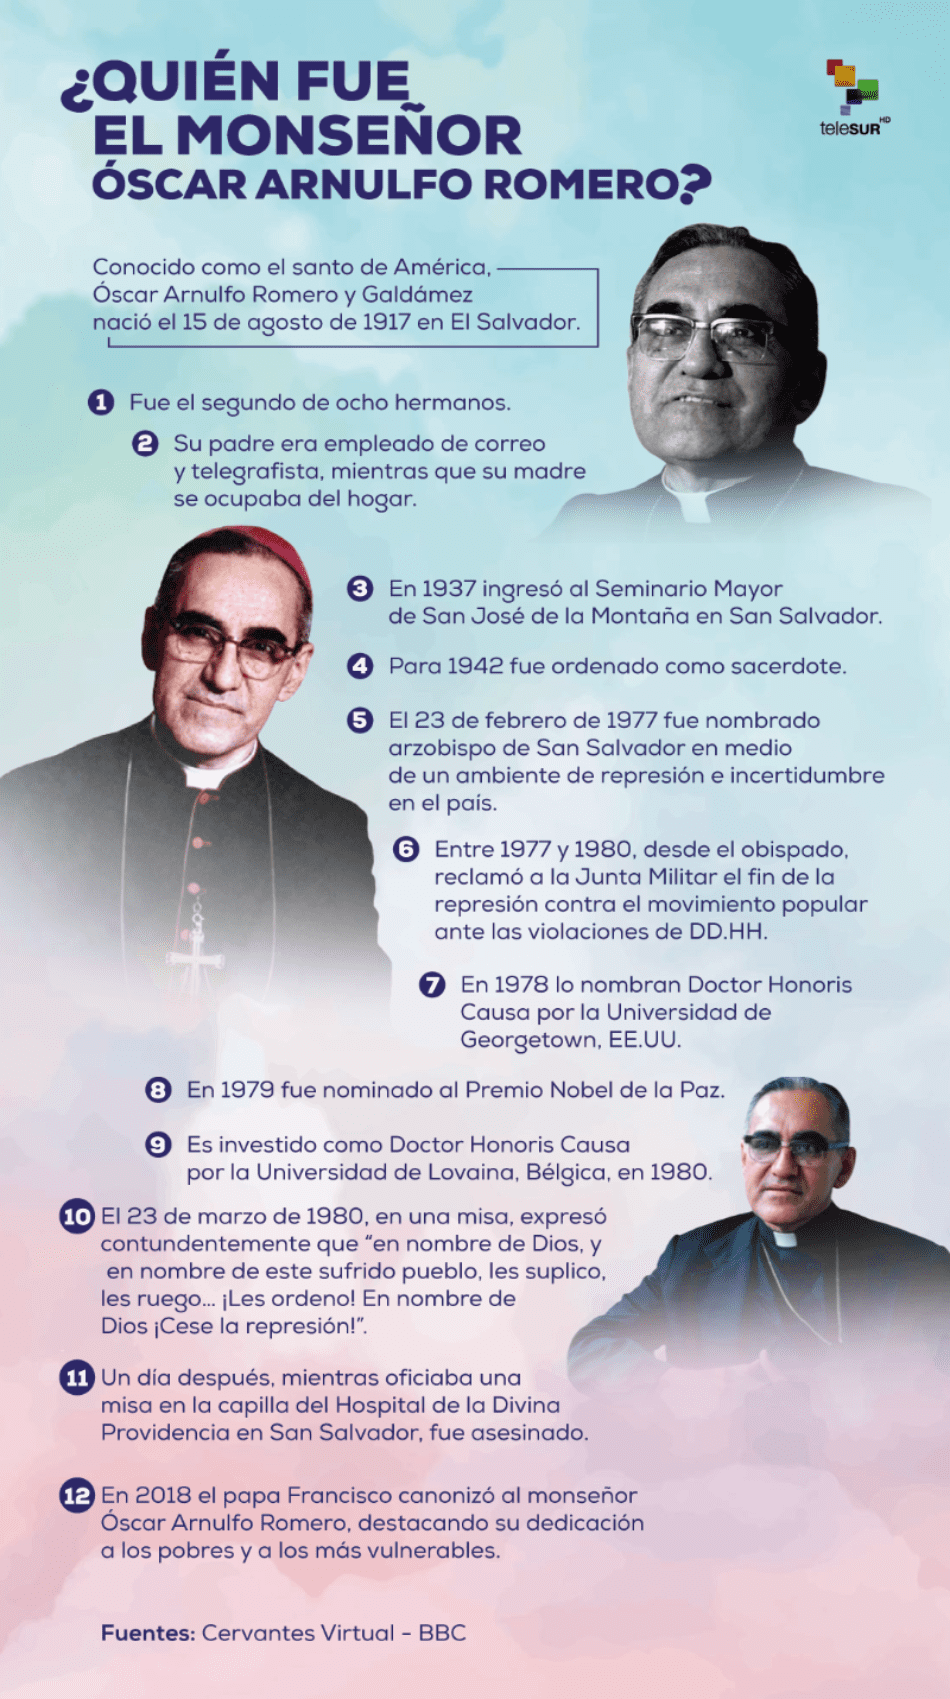 Monseñor Óscar Arnulfo Romero, el santo de América